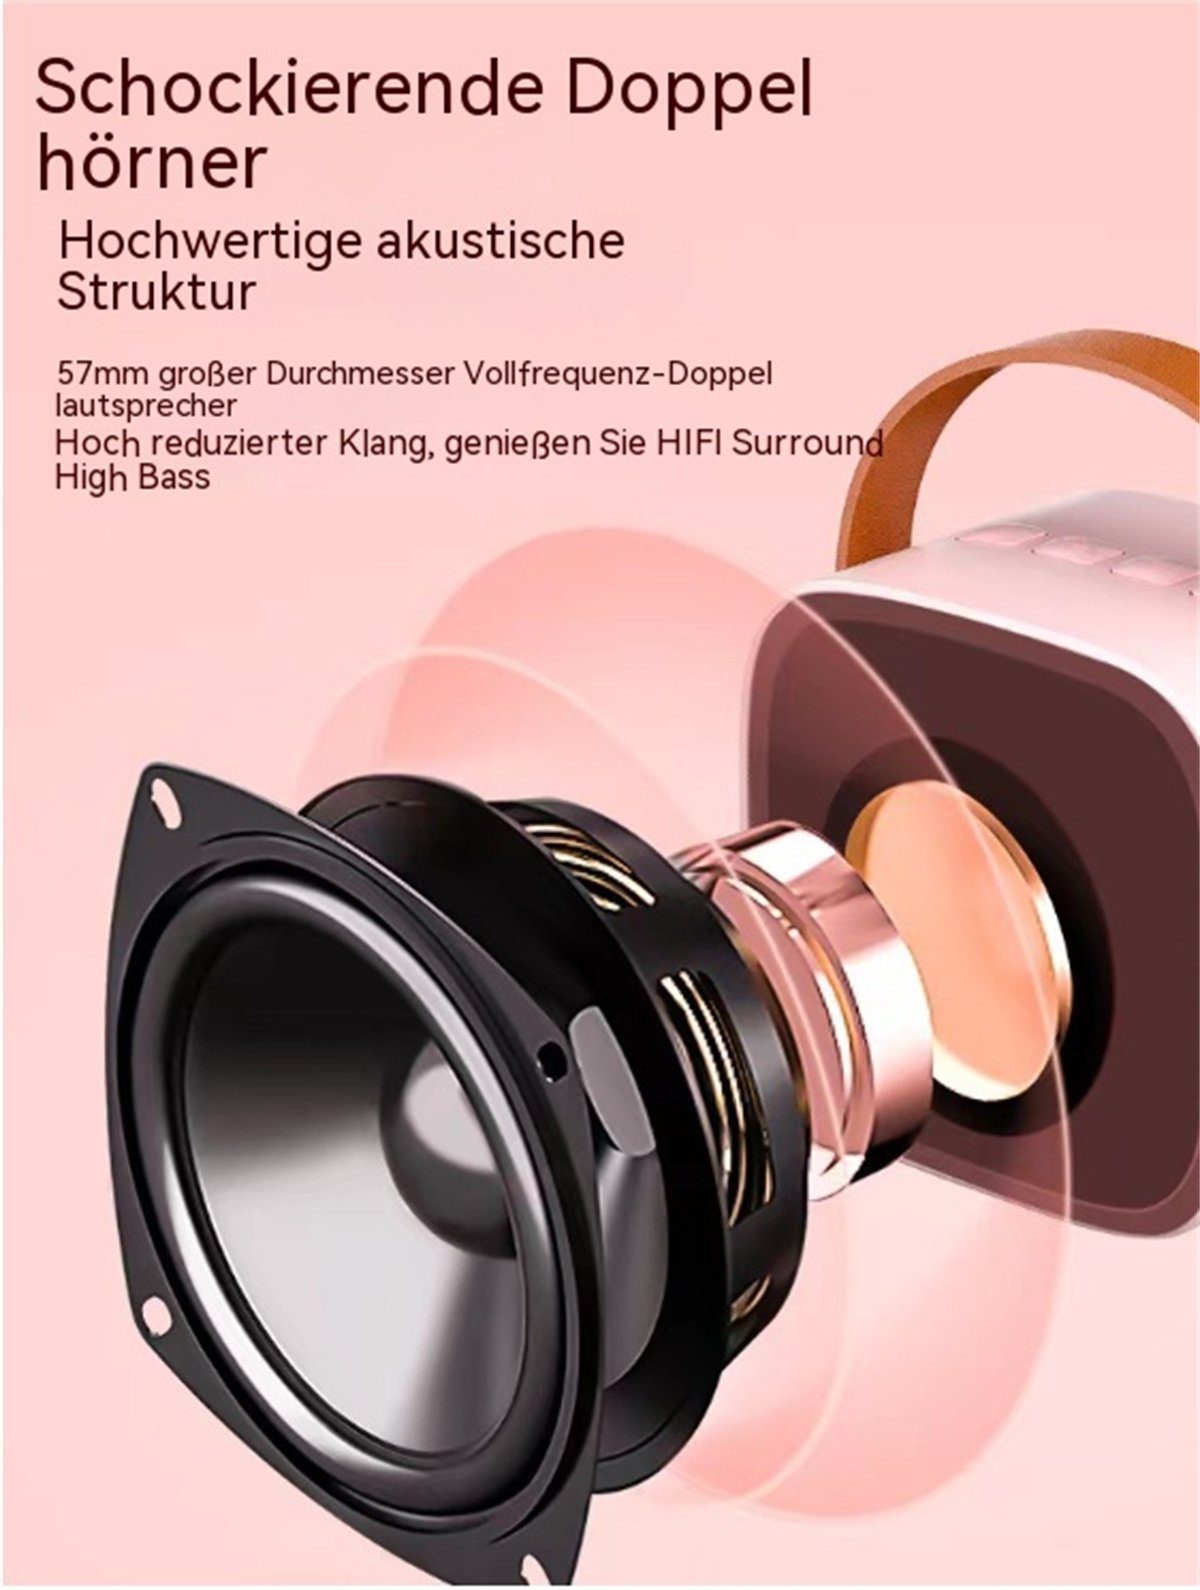 carefully selected Tragbarer Bluetooth-Lautsprecher, kabelloses (1 Mikrofon) Bluetooth-Lautsprecher Mikrofon-Set Weiß